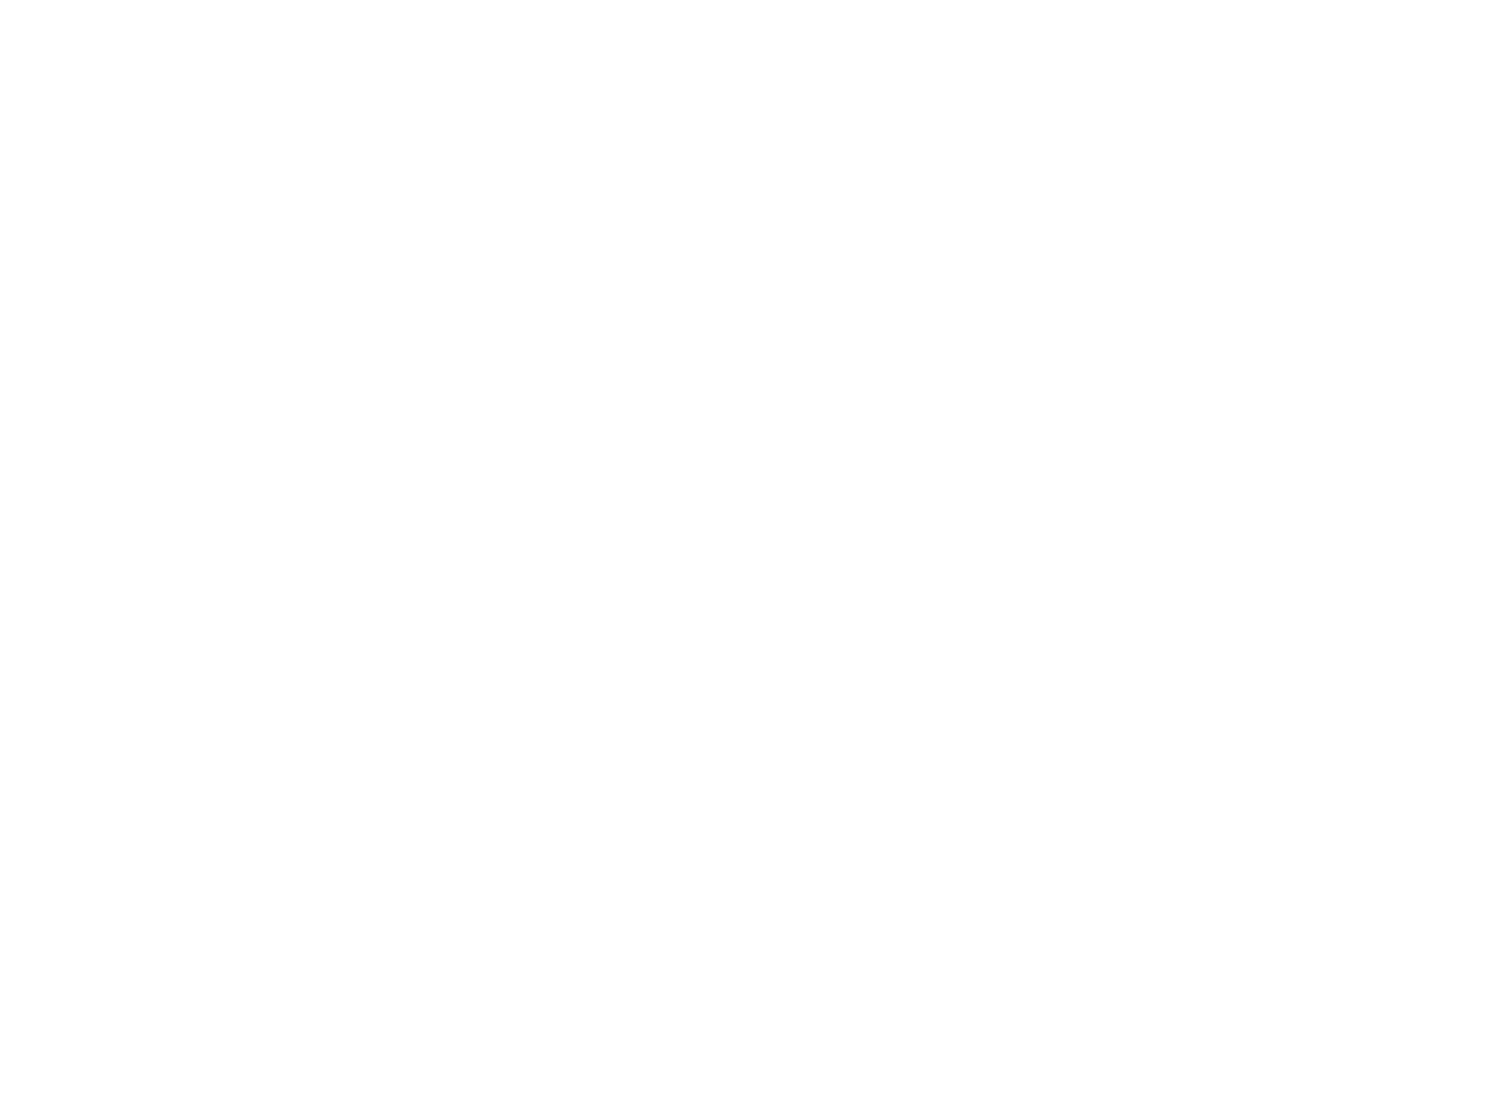 UNESCO Chaire